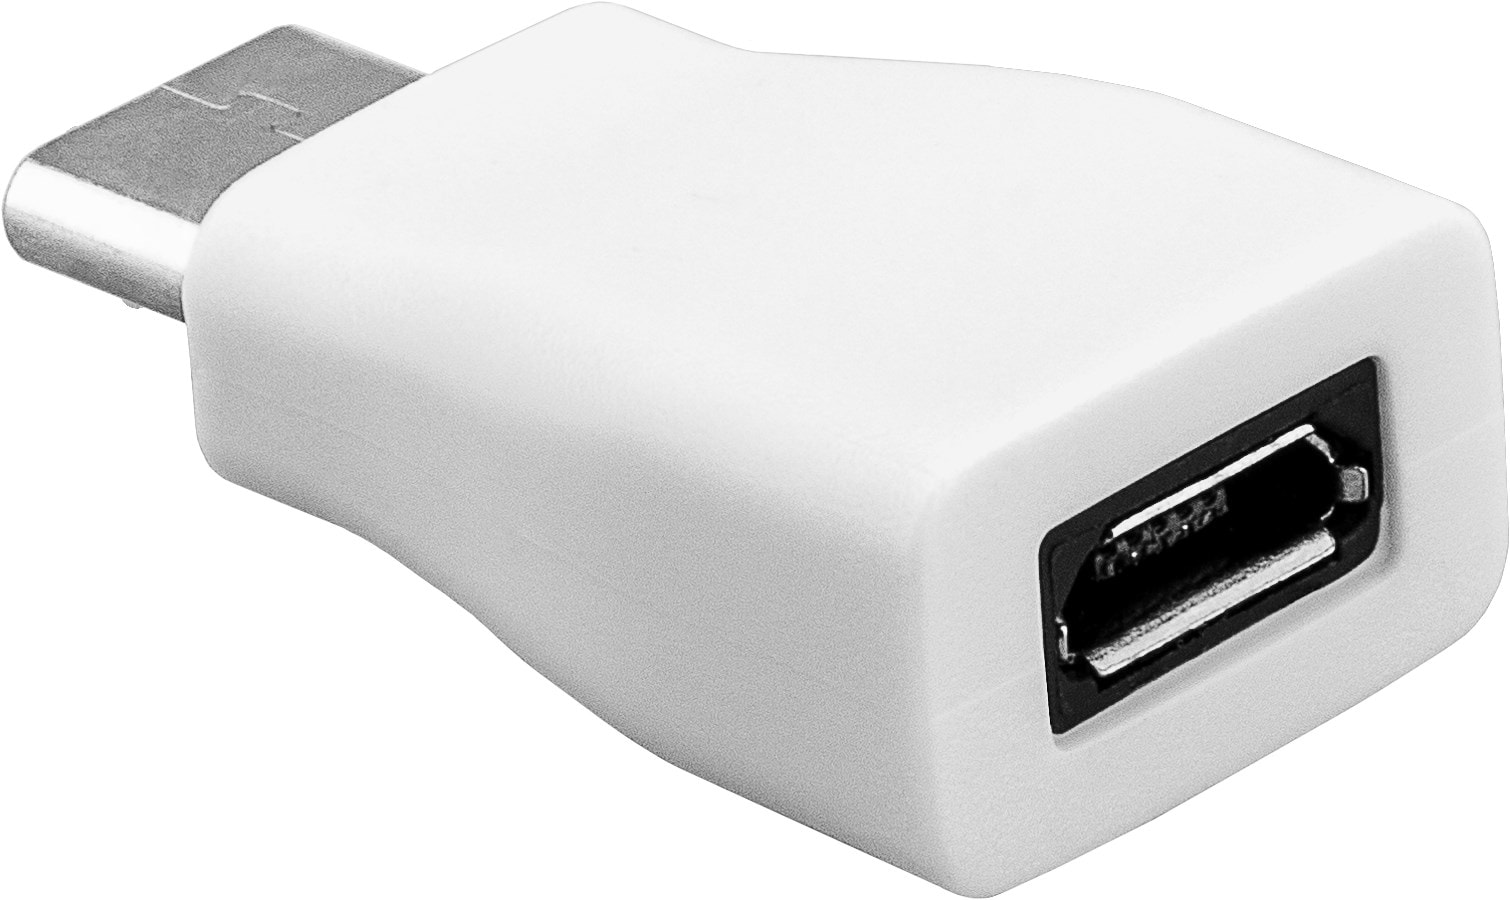 USB-C Adapter - USB 2.0 Micro B Port